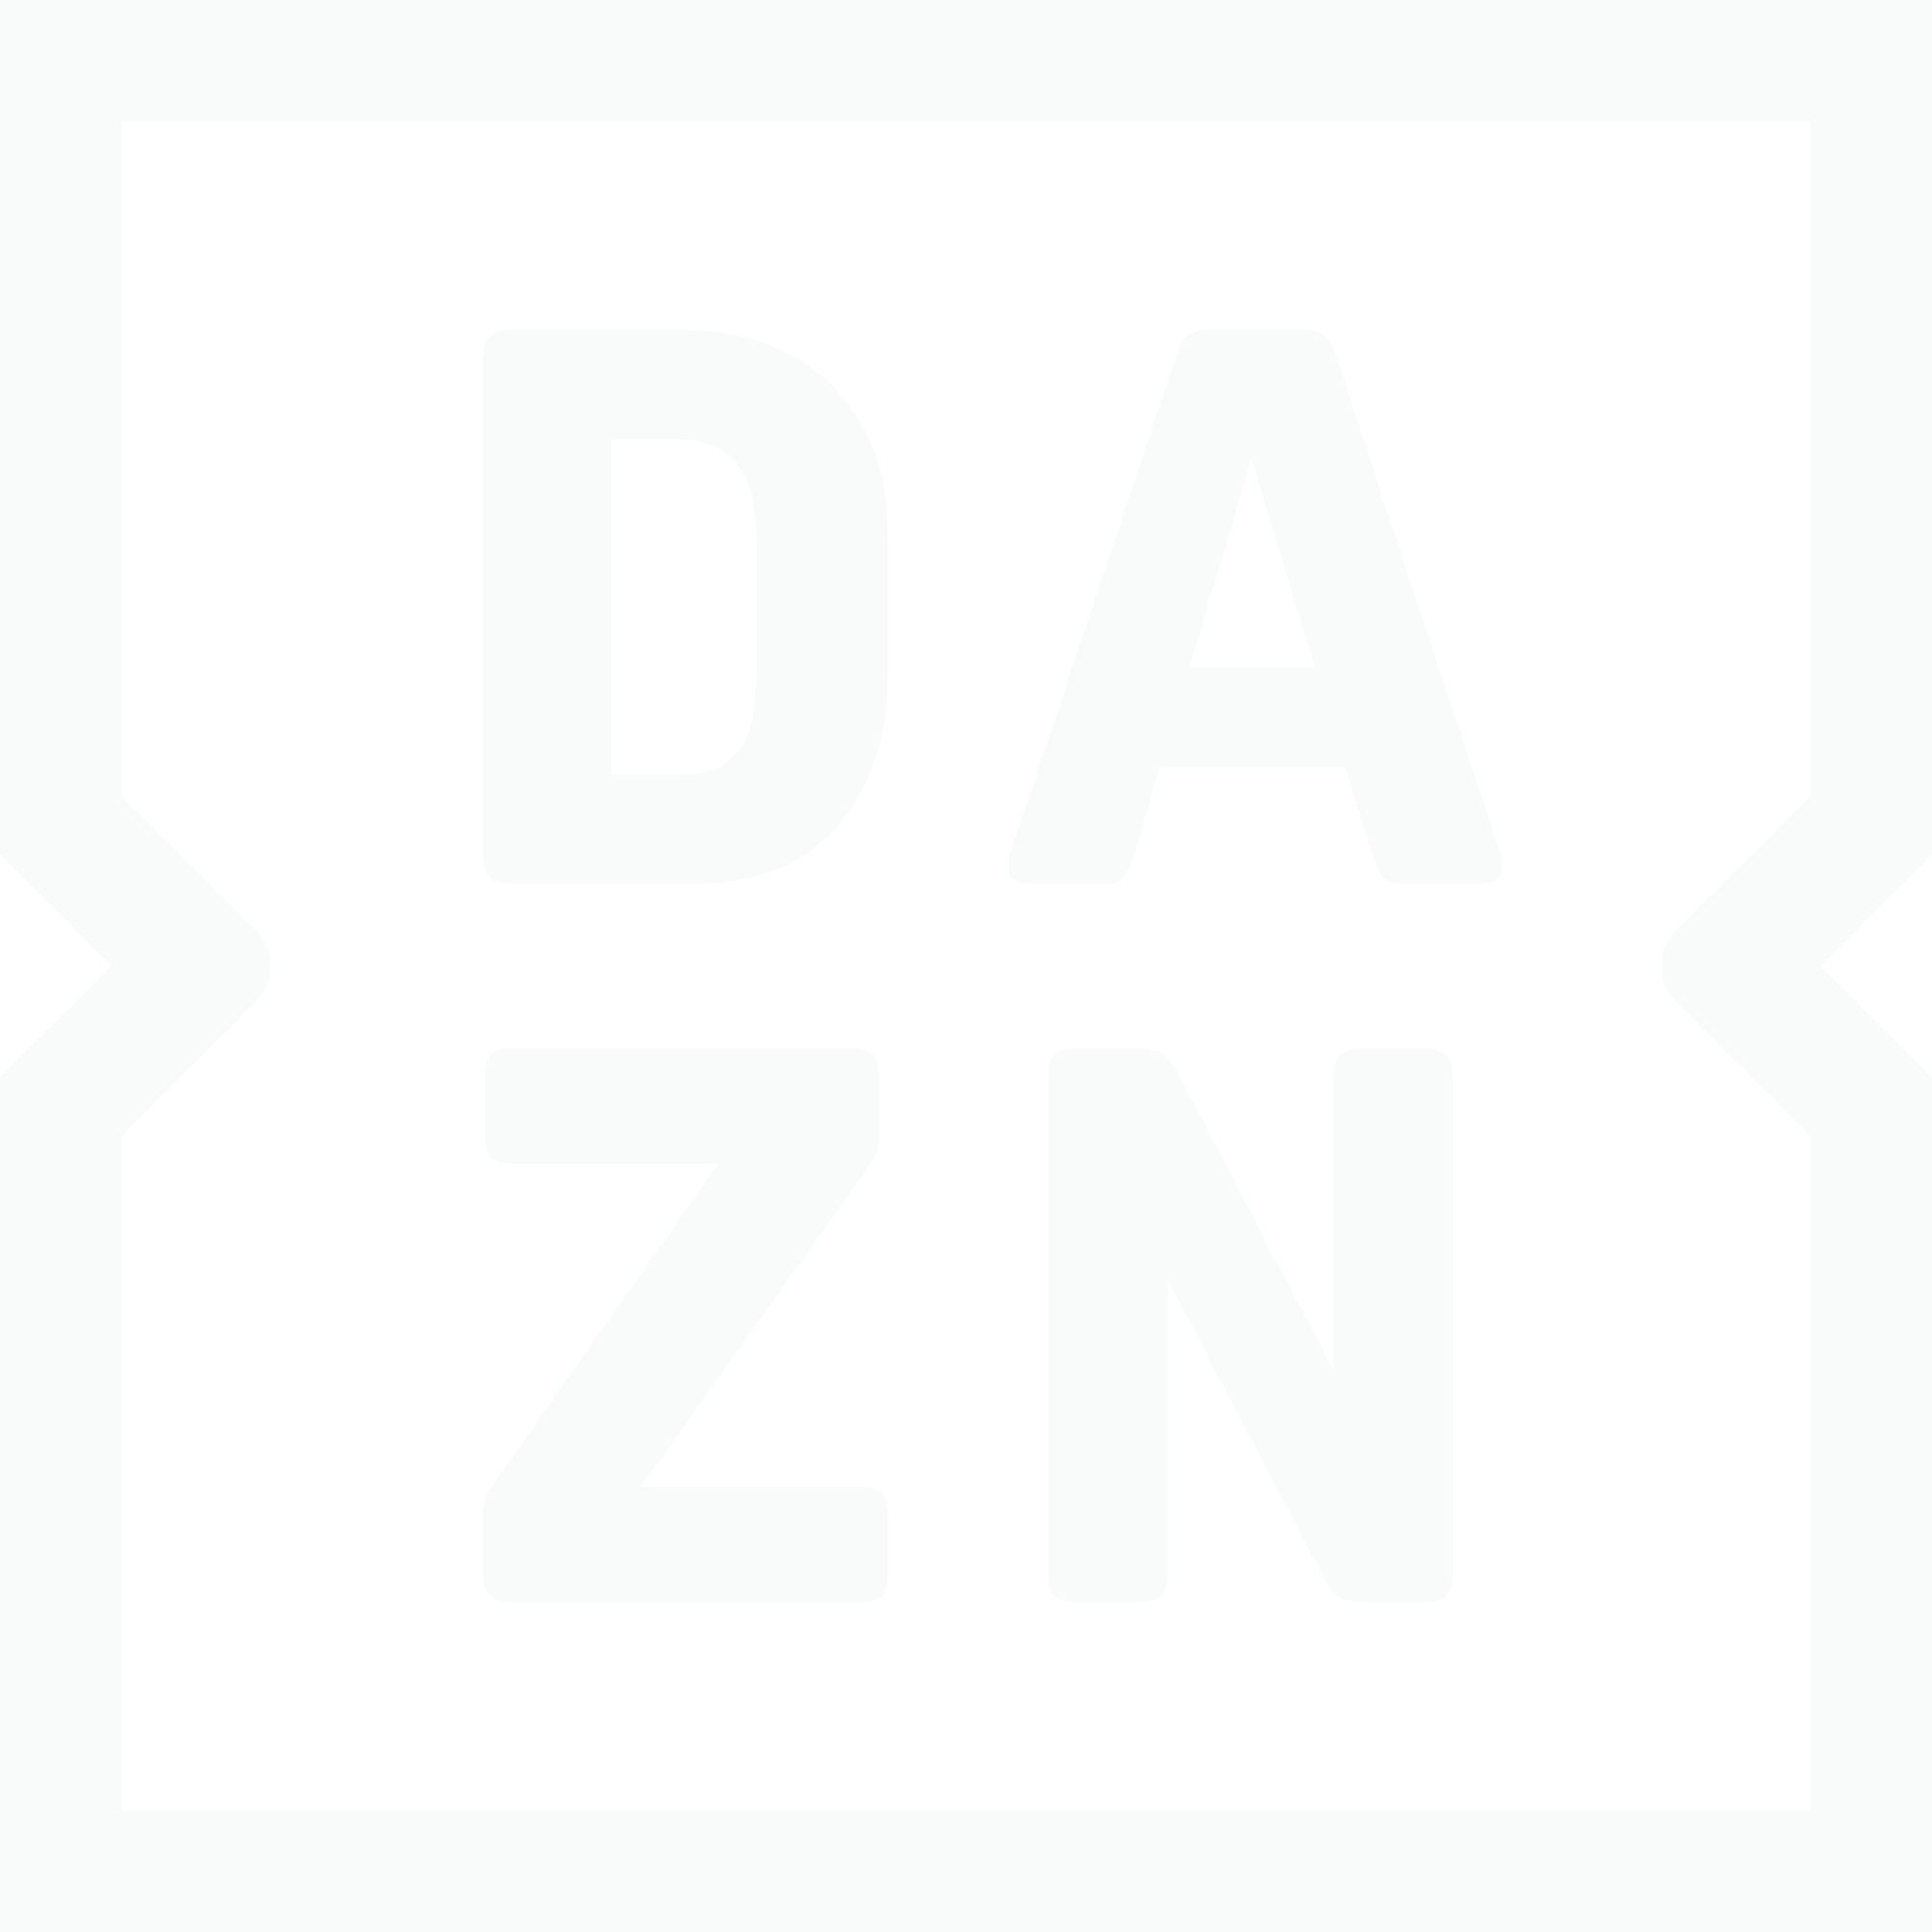 DAZN partnership logo